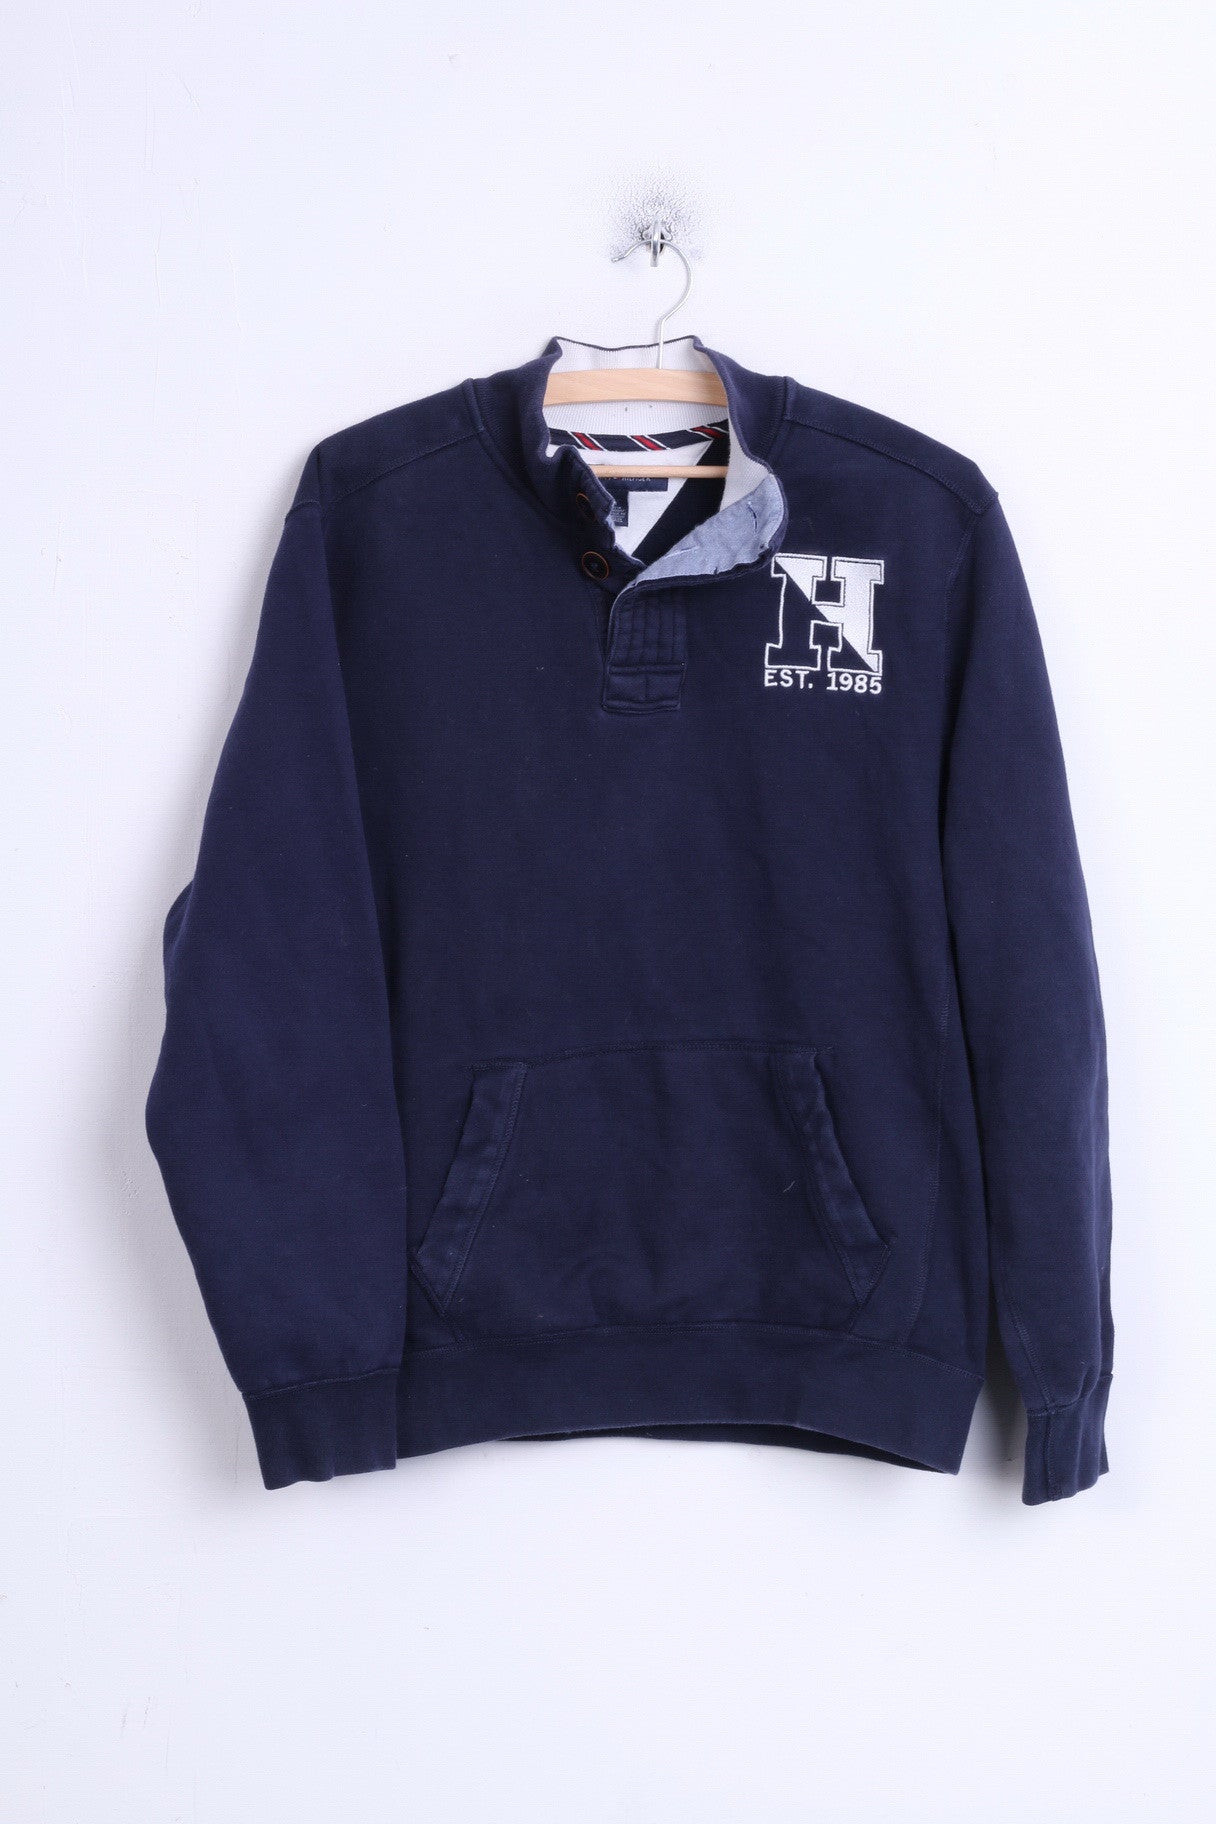 Tommy Hilfiger Mens M Jumper Sweater Navy Cotton Kangaroo Pocket